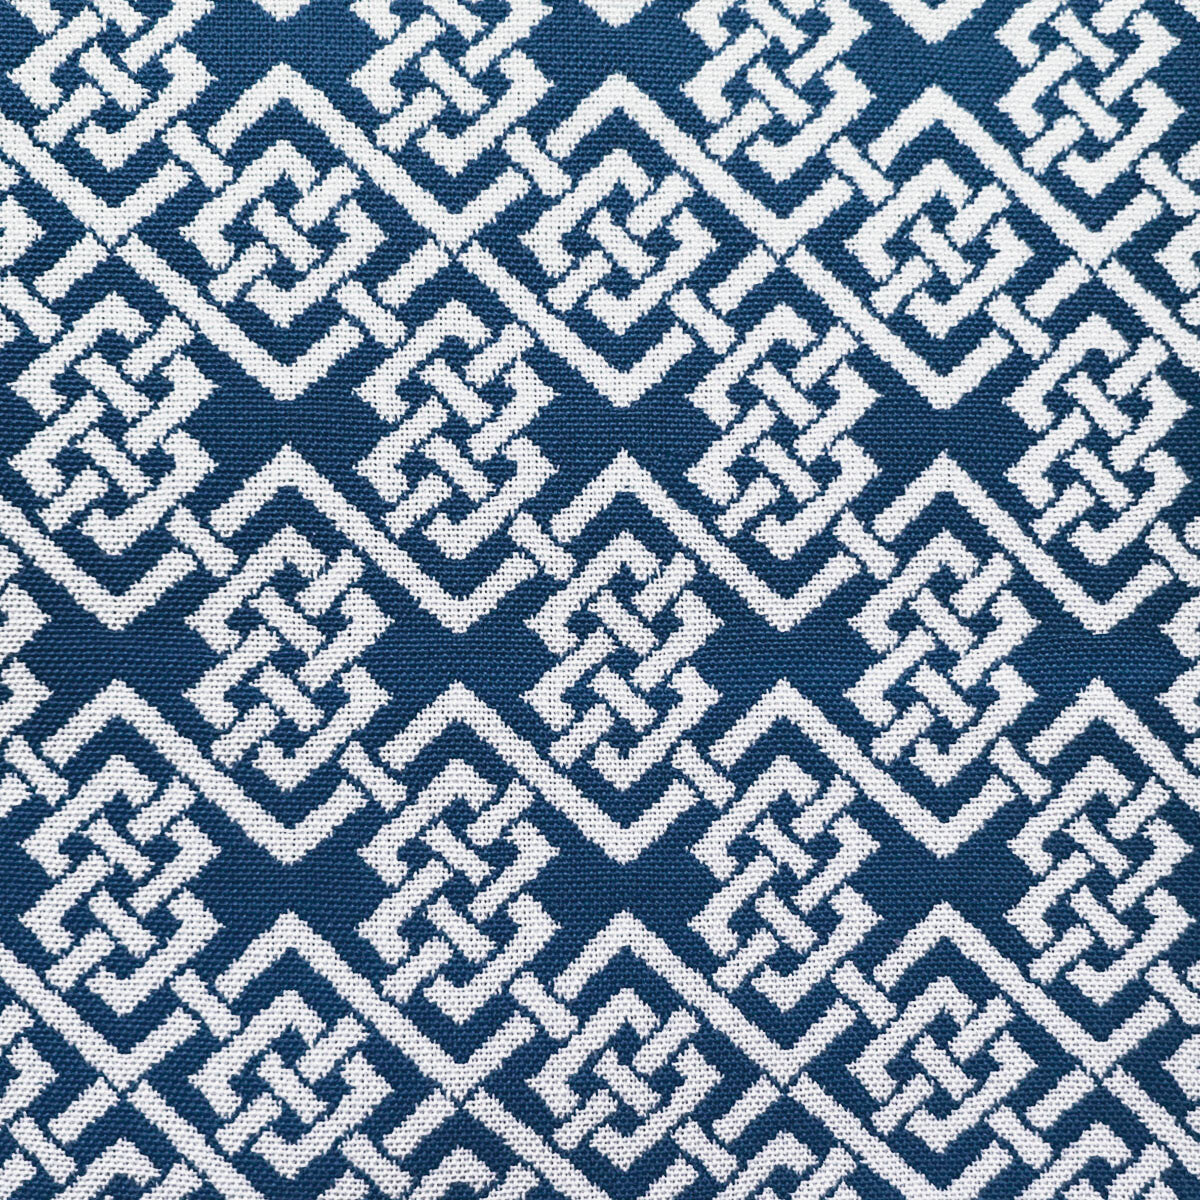 Ephraim fabric in azul color - pattern LCT1055.008.0 - by Gaston y Daniela in the Lorenzo Castillo VI collection